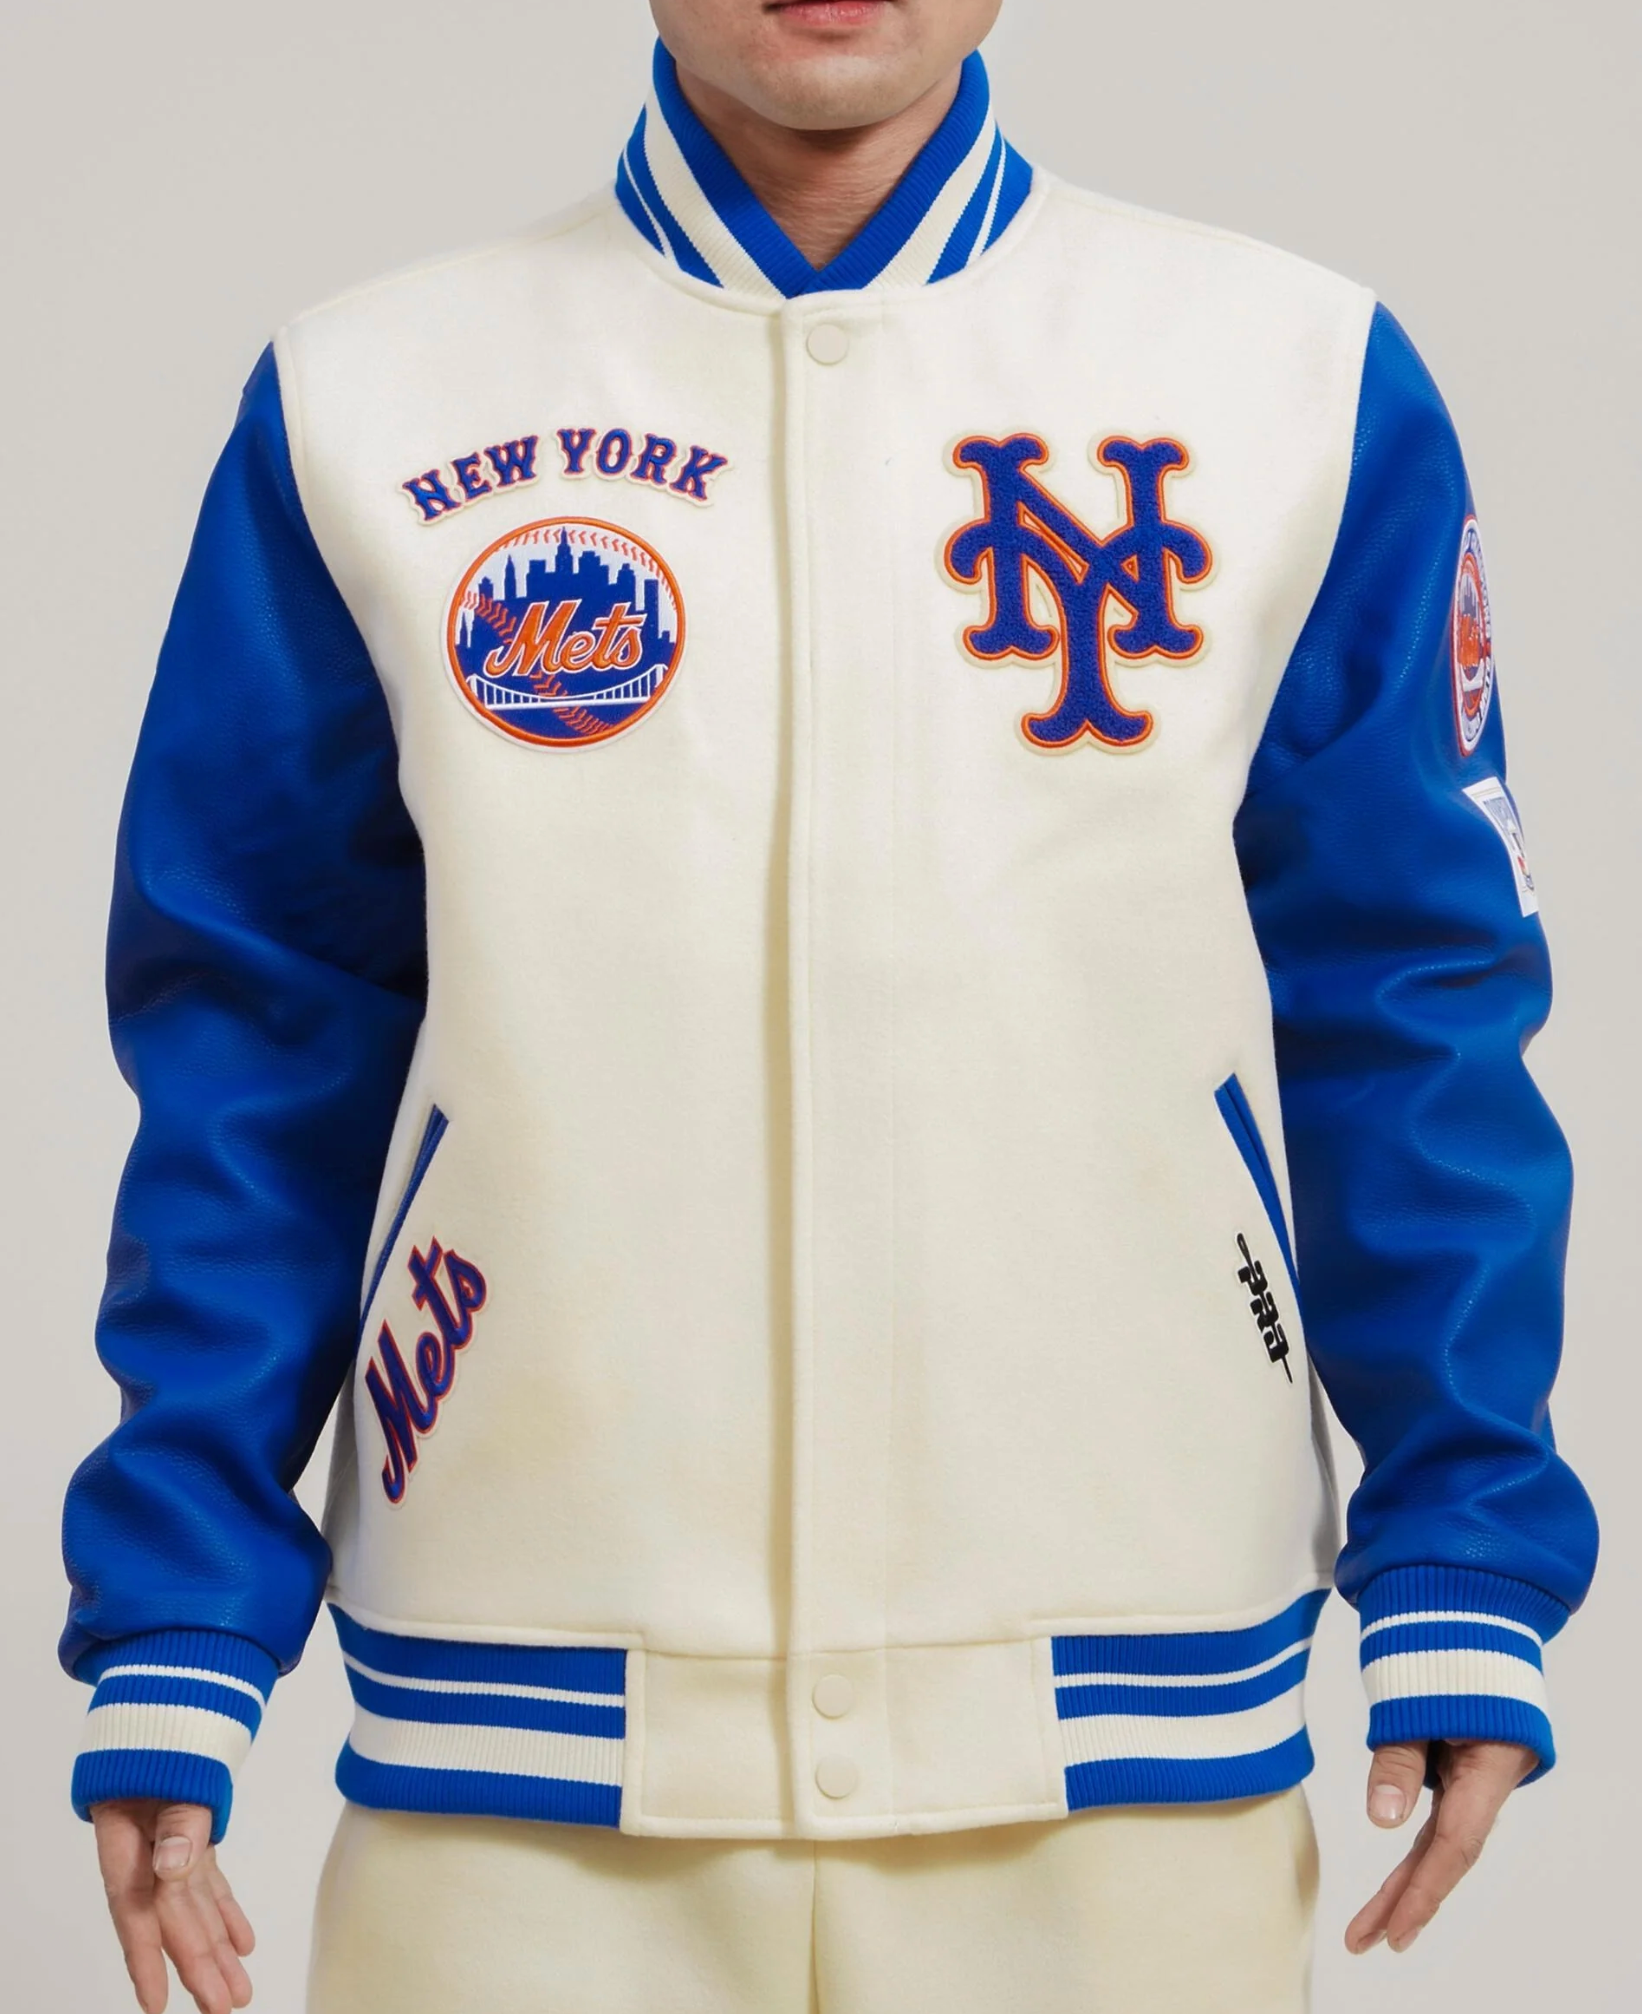 New York Mets Pro Standard Varsity Logo Full-Zip Jacket - Royal